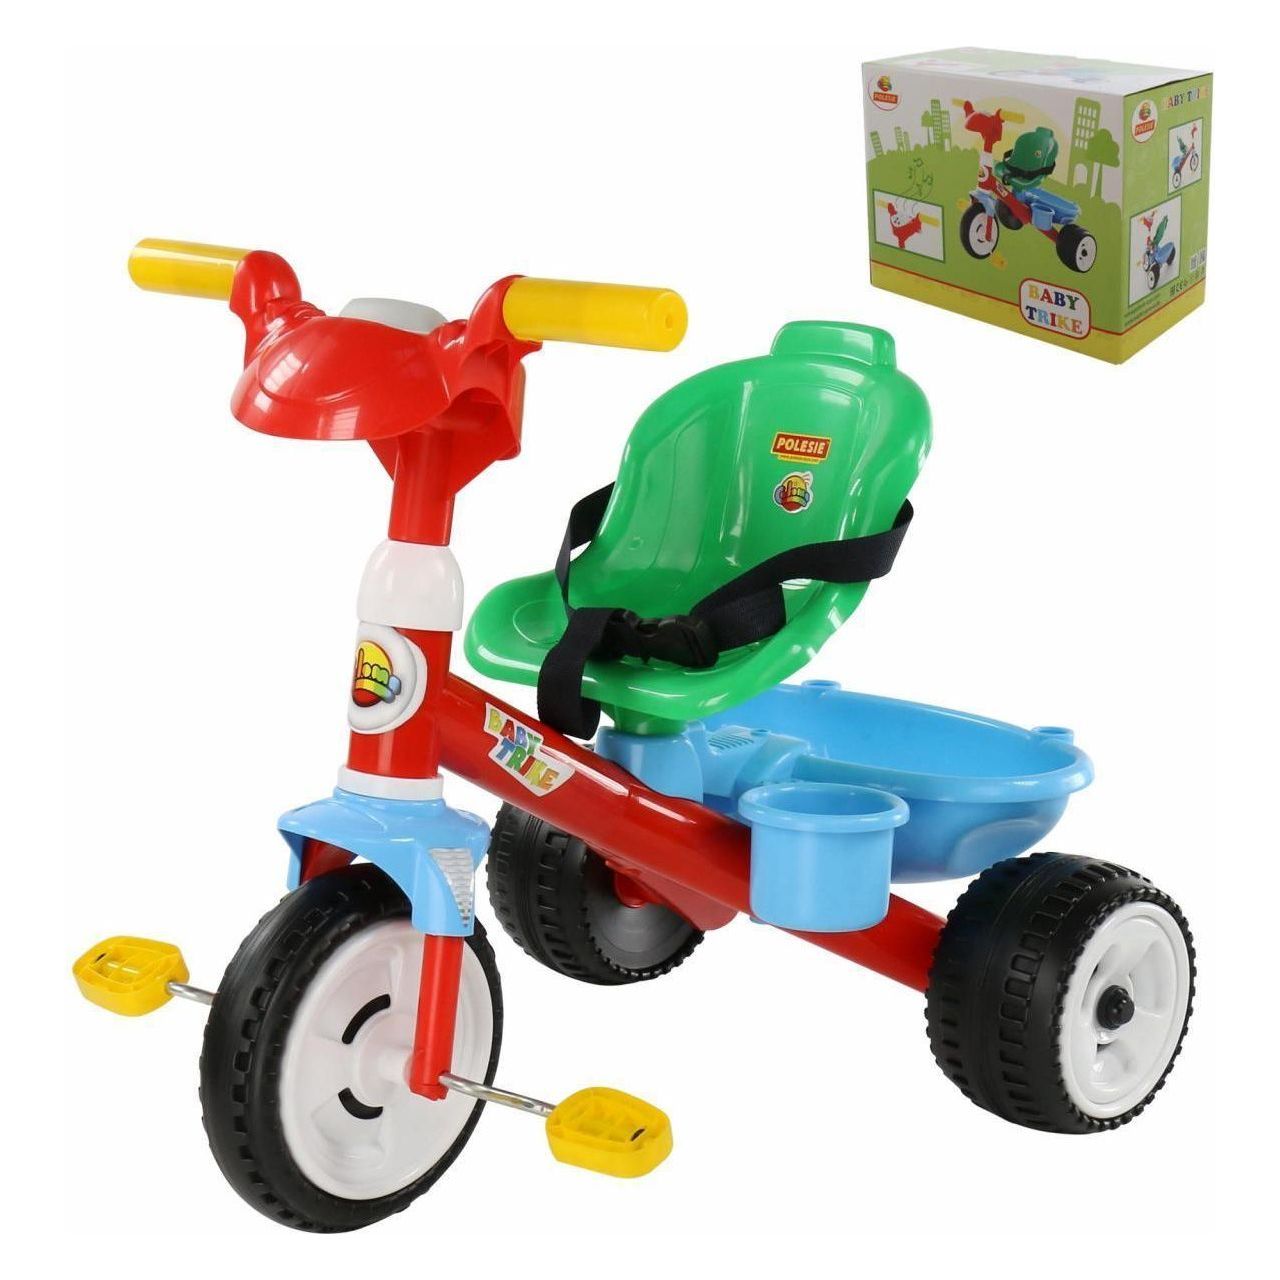 Polesie 66213 Baby Trike With Sound & Straps - BumbleToys - 5-7 Years, Cecil, Pre-Order, Trikes & Wagons, Unisex